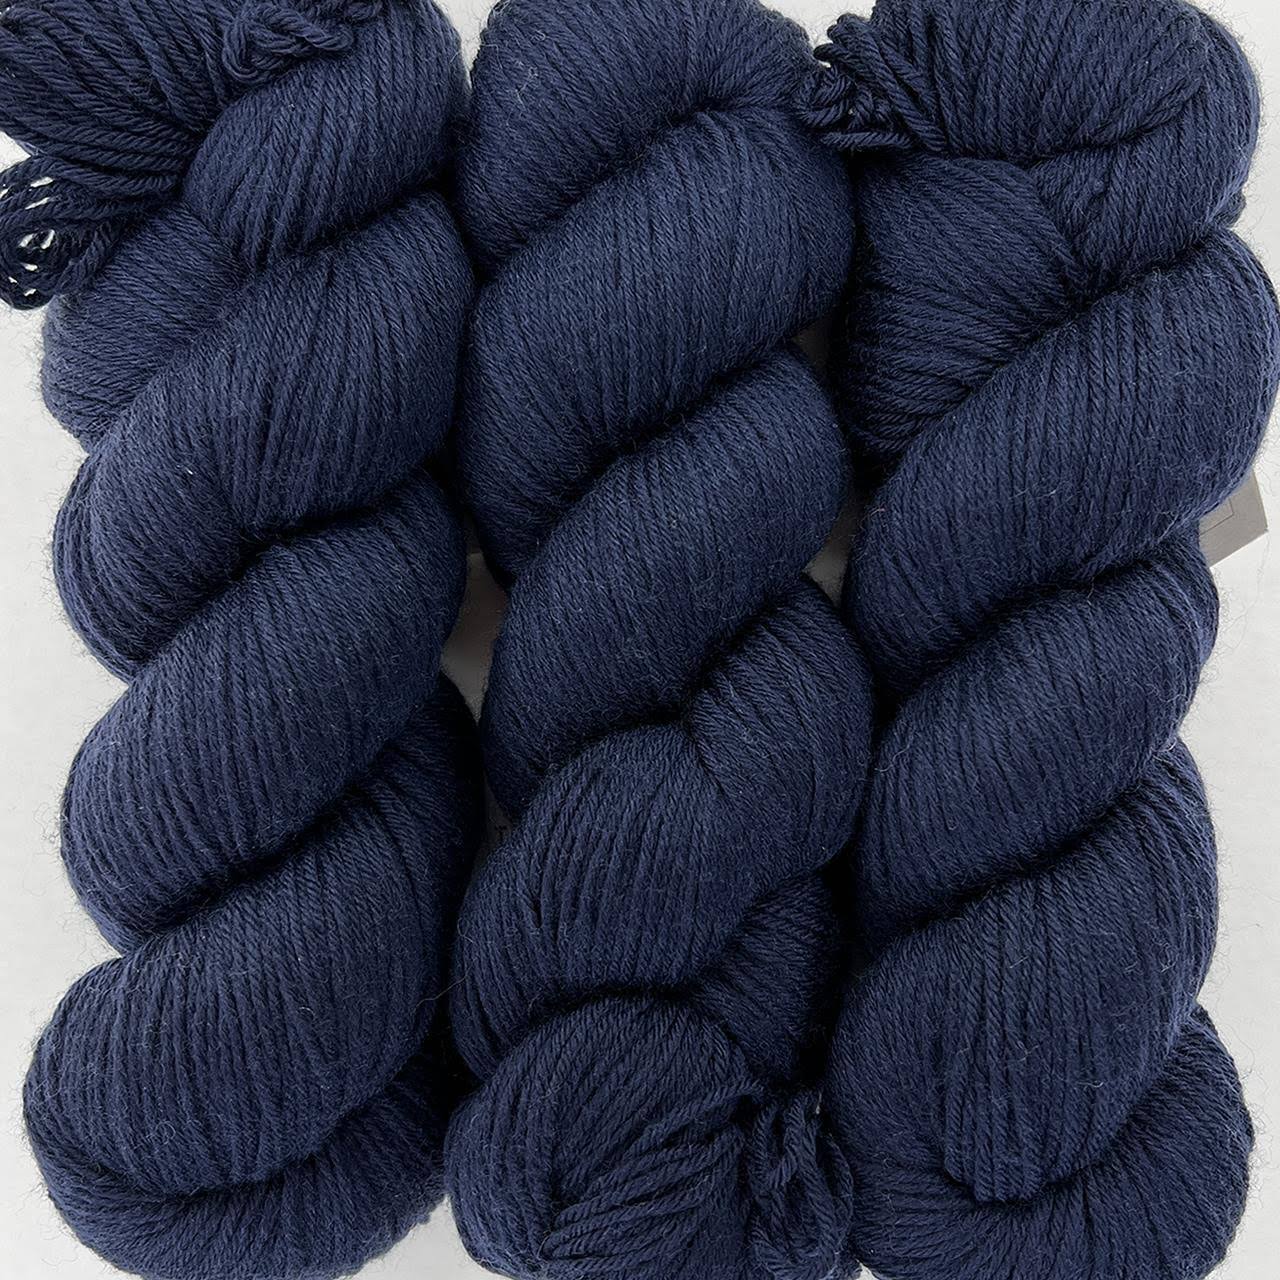 Cascade Yarns Heritage 6 - Navy (5623) 100g (3.5oz) 75% Merino Wool 25% Nylon